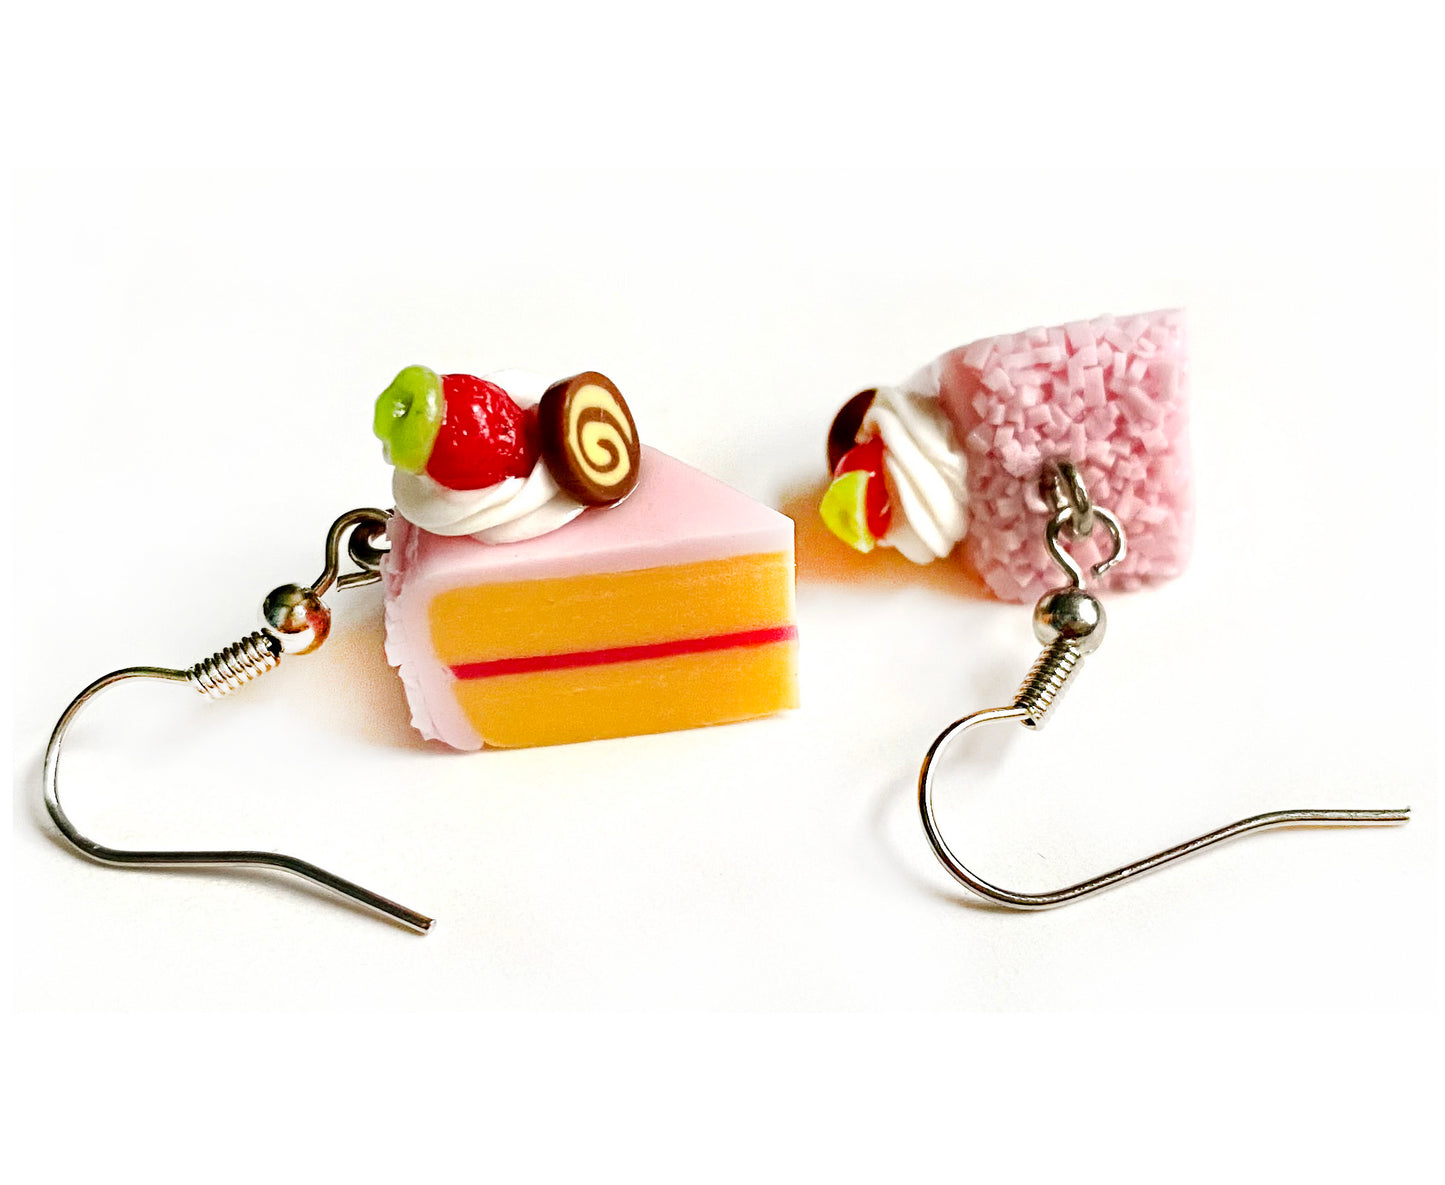 Handmade miniature food model earrings for Girls Teen - Slice Cake Strawberry Cookies